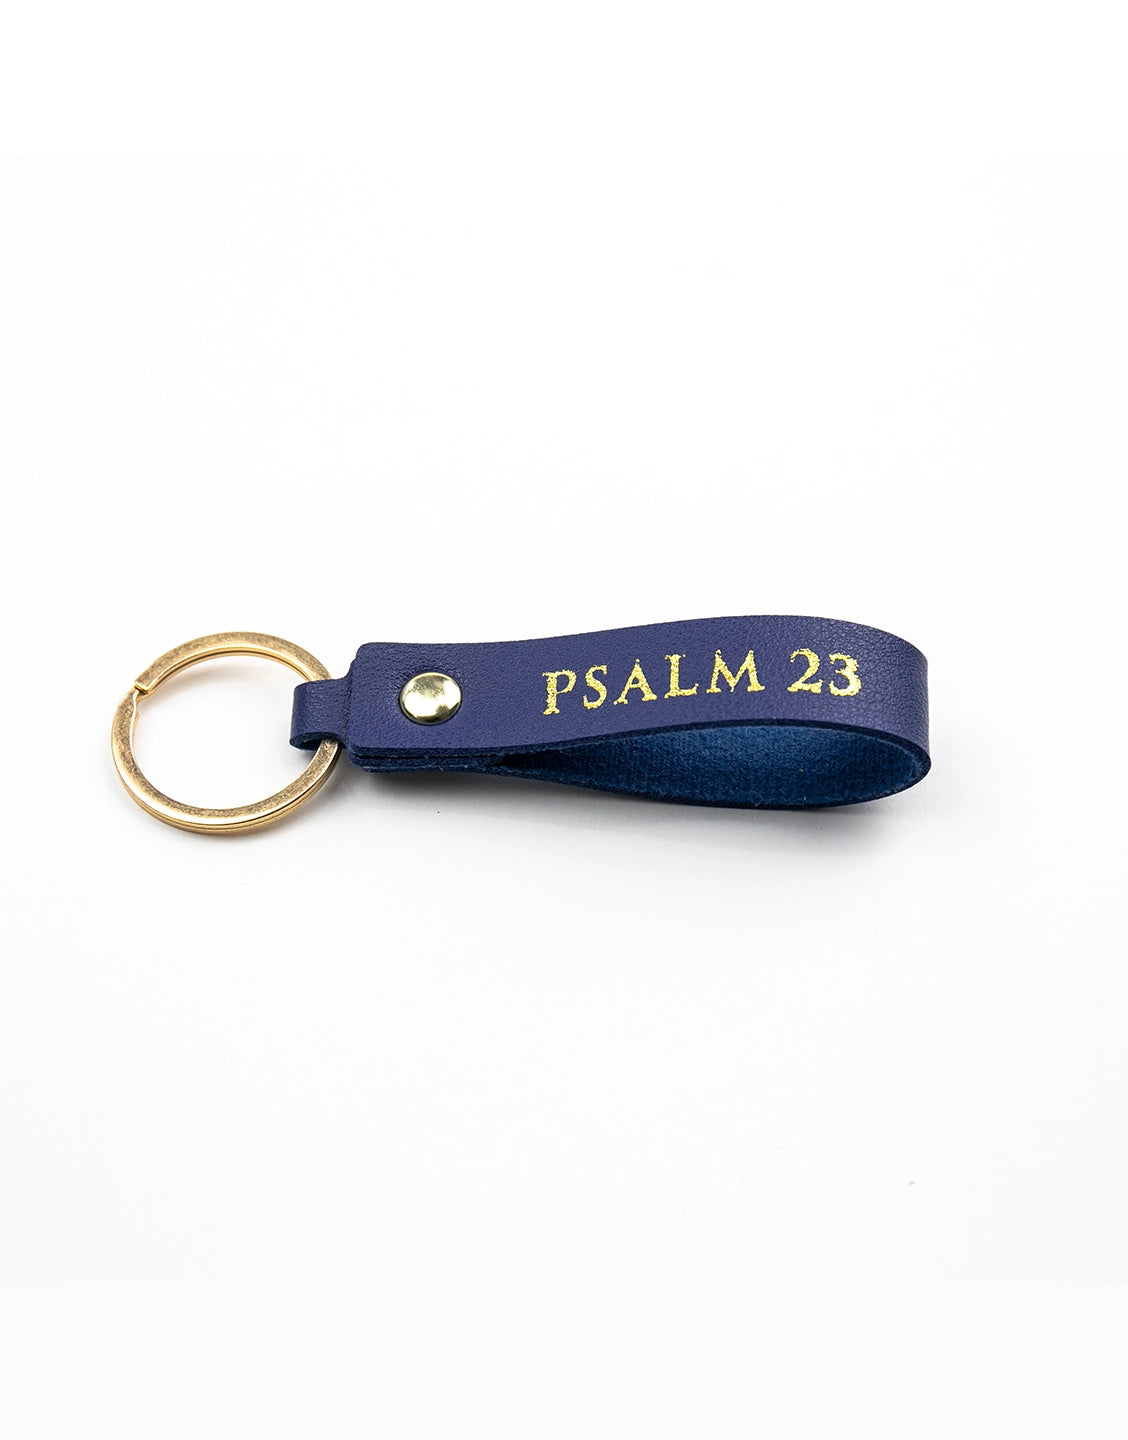 Psalm 23 Leather Keychain - VOTC Clothing